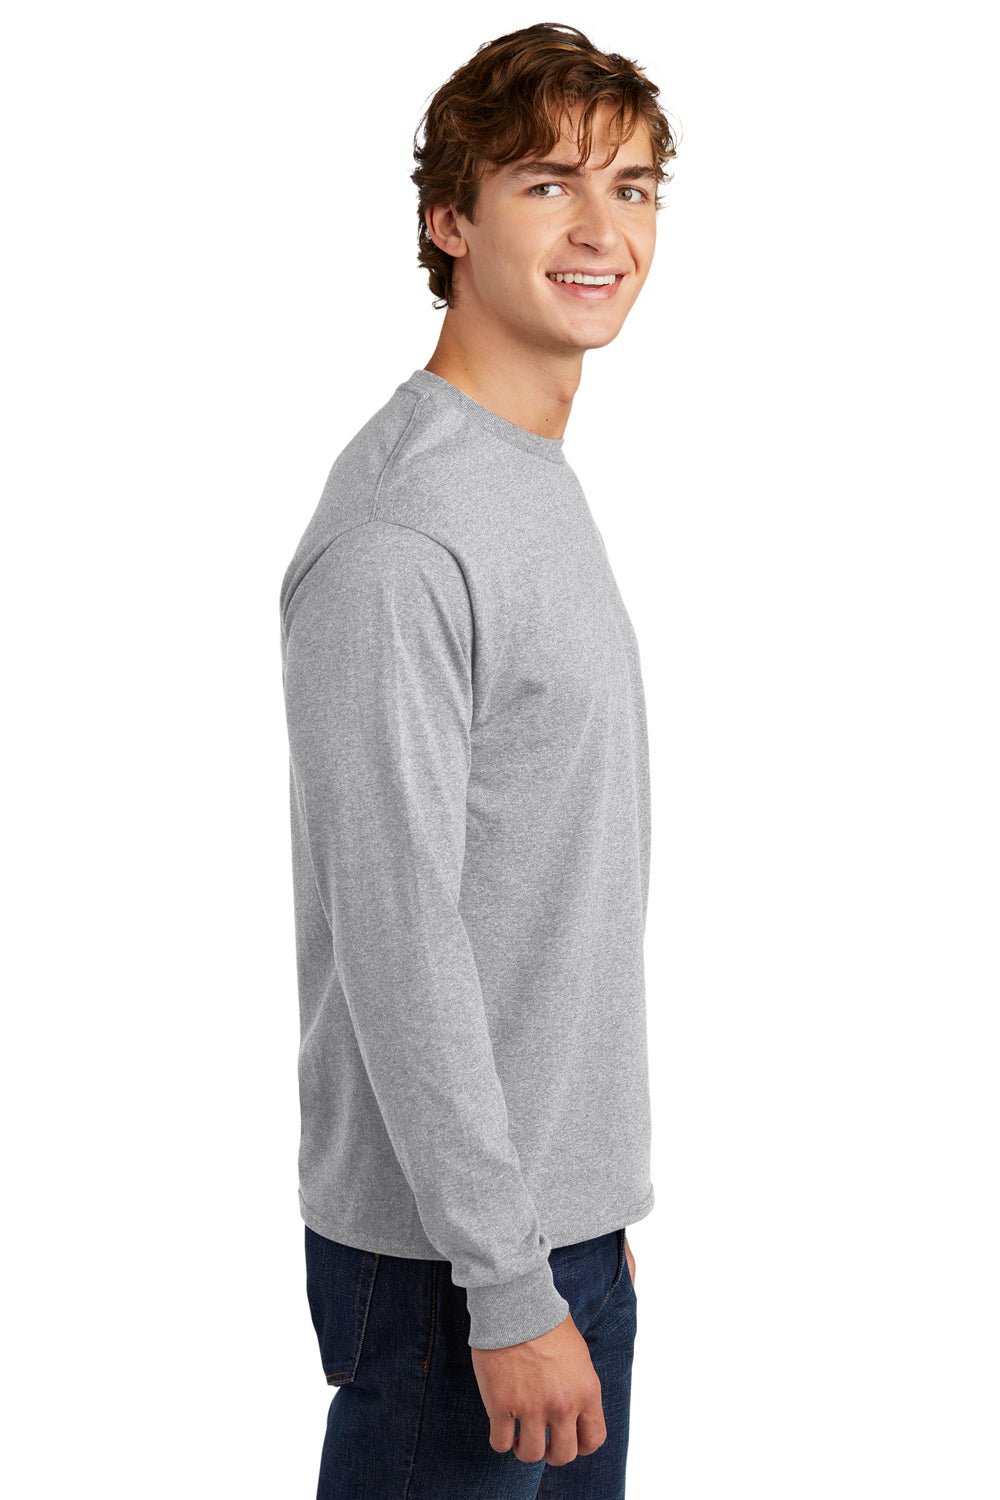 Hanes 5286 Mens ComfortSoft Long Sleeve Crewneck T-Shirt Ash Grey Side